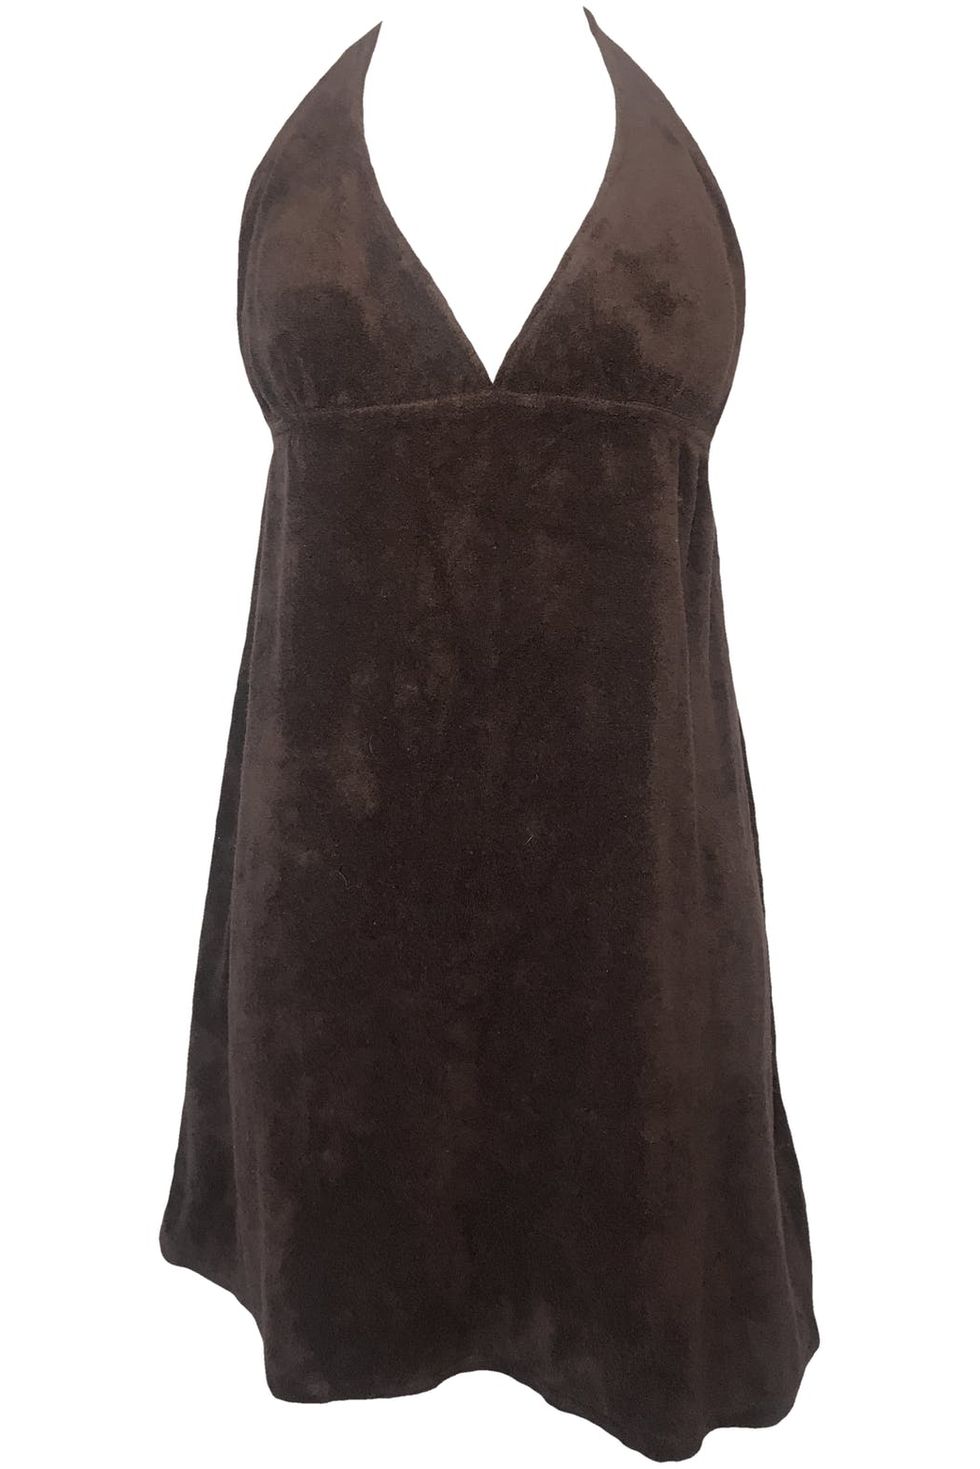 70’s Dark Brown Mini Halter Dress with Tie In Back by La Palapa